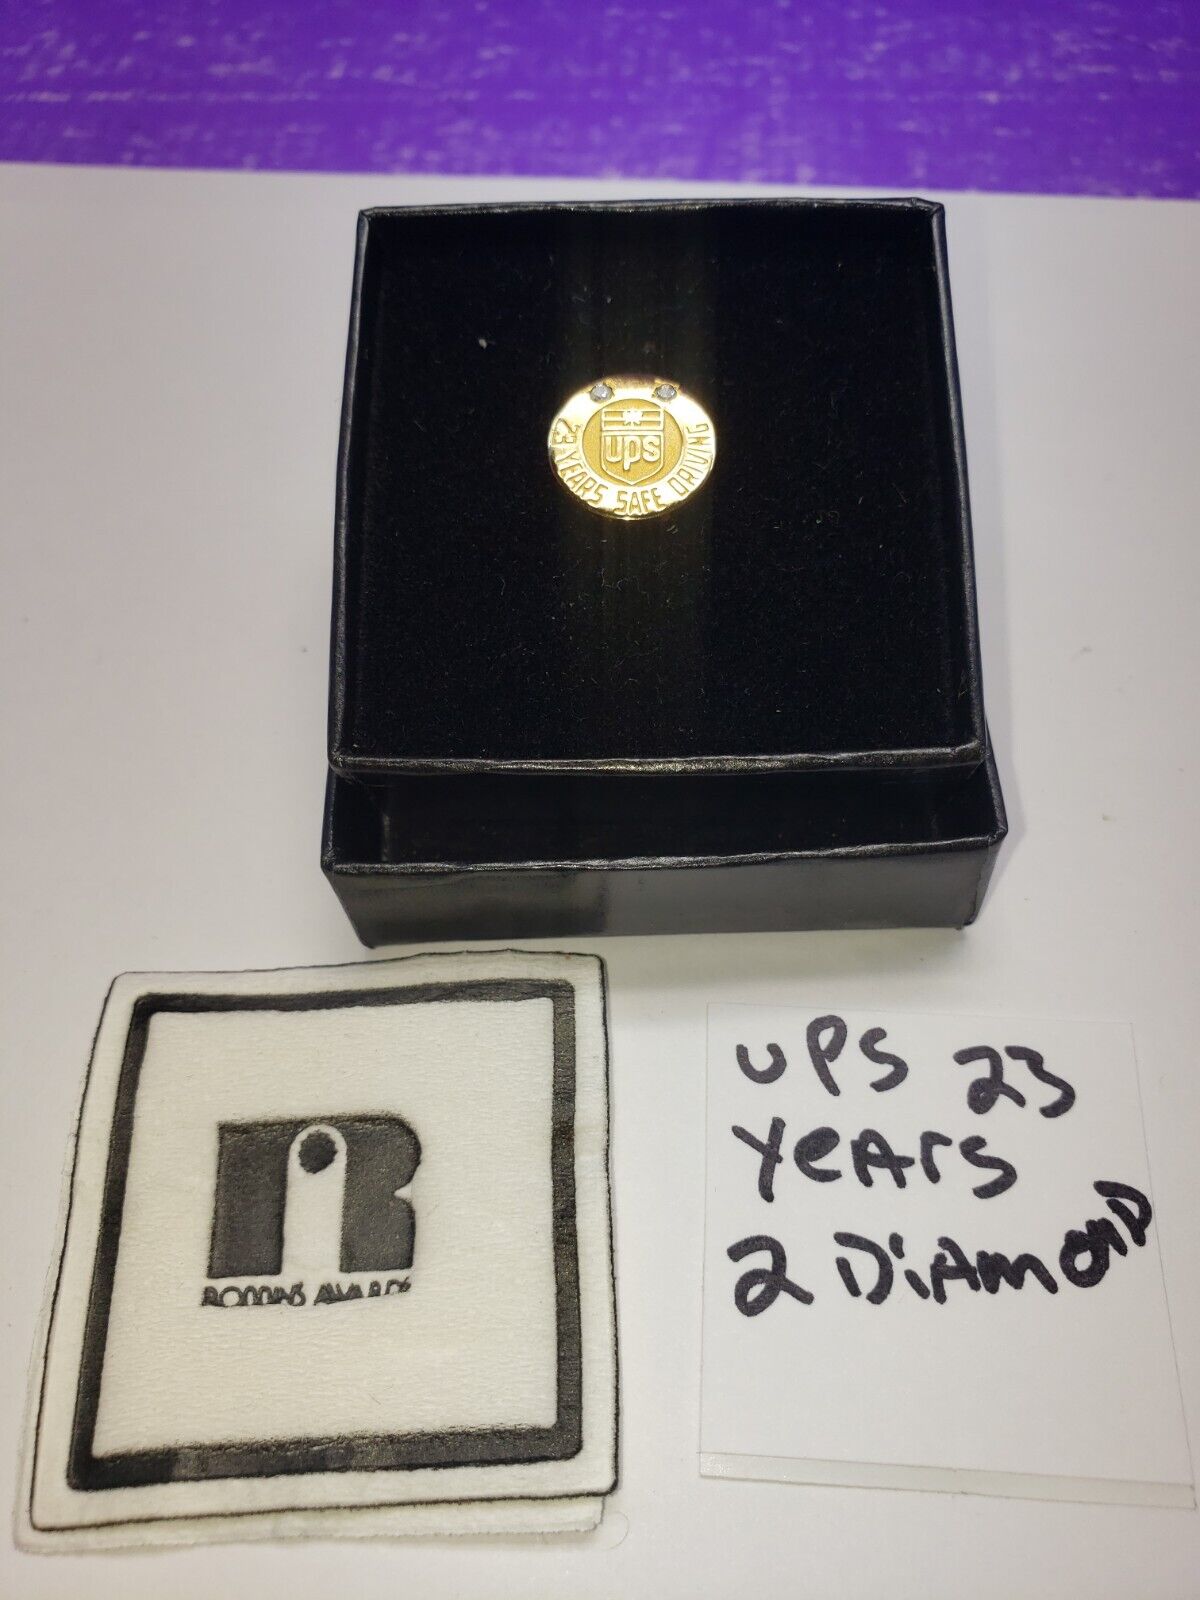 23 Year Safe Driver UPS Employee Service Award Pin 2 Diamonds Tie Tack 1/10 10K